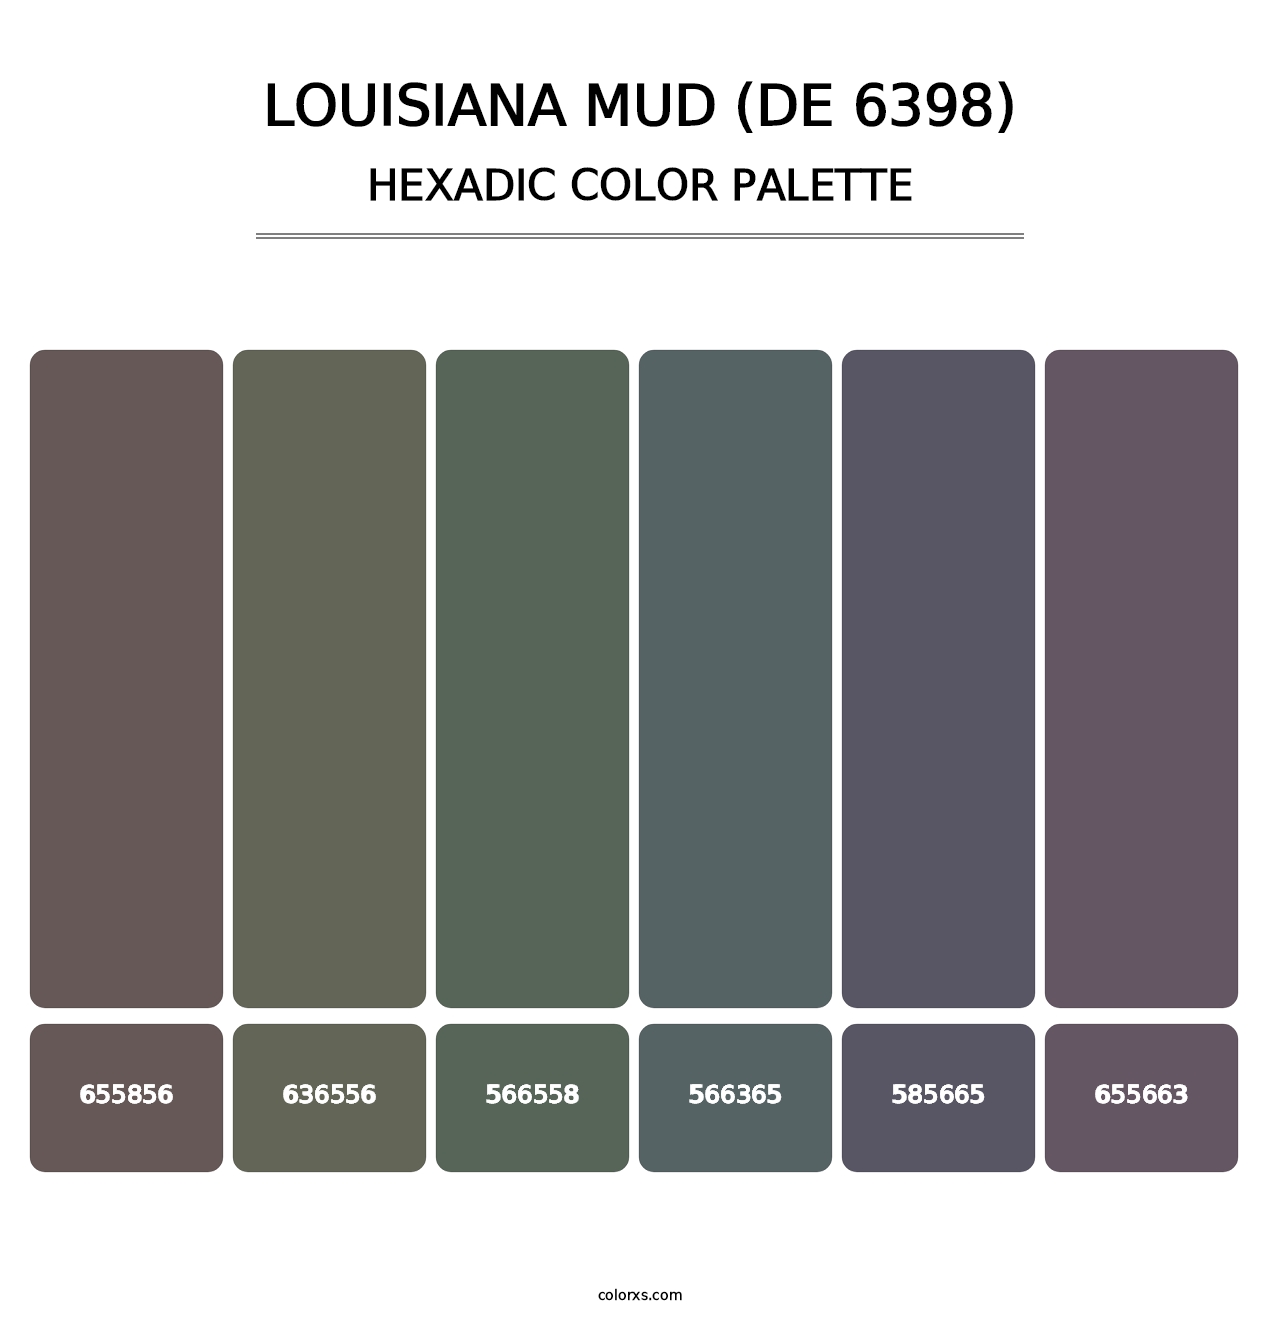 Louisiana Mud (DE 6398) - Hexadic Color Palette